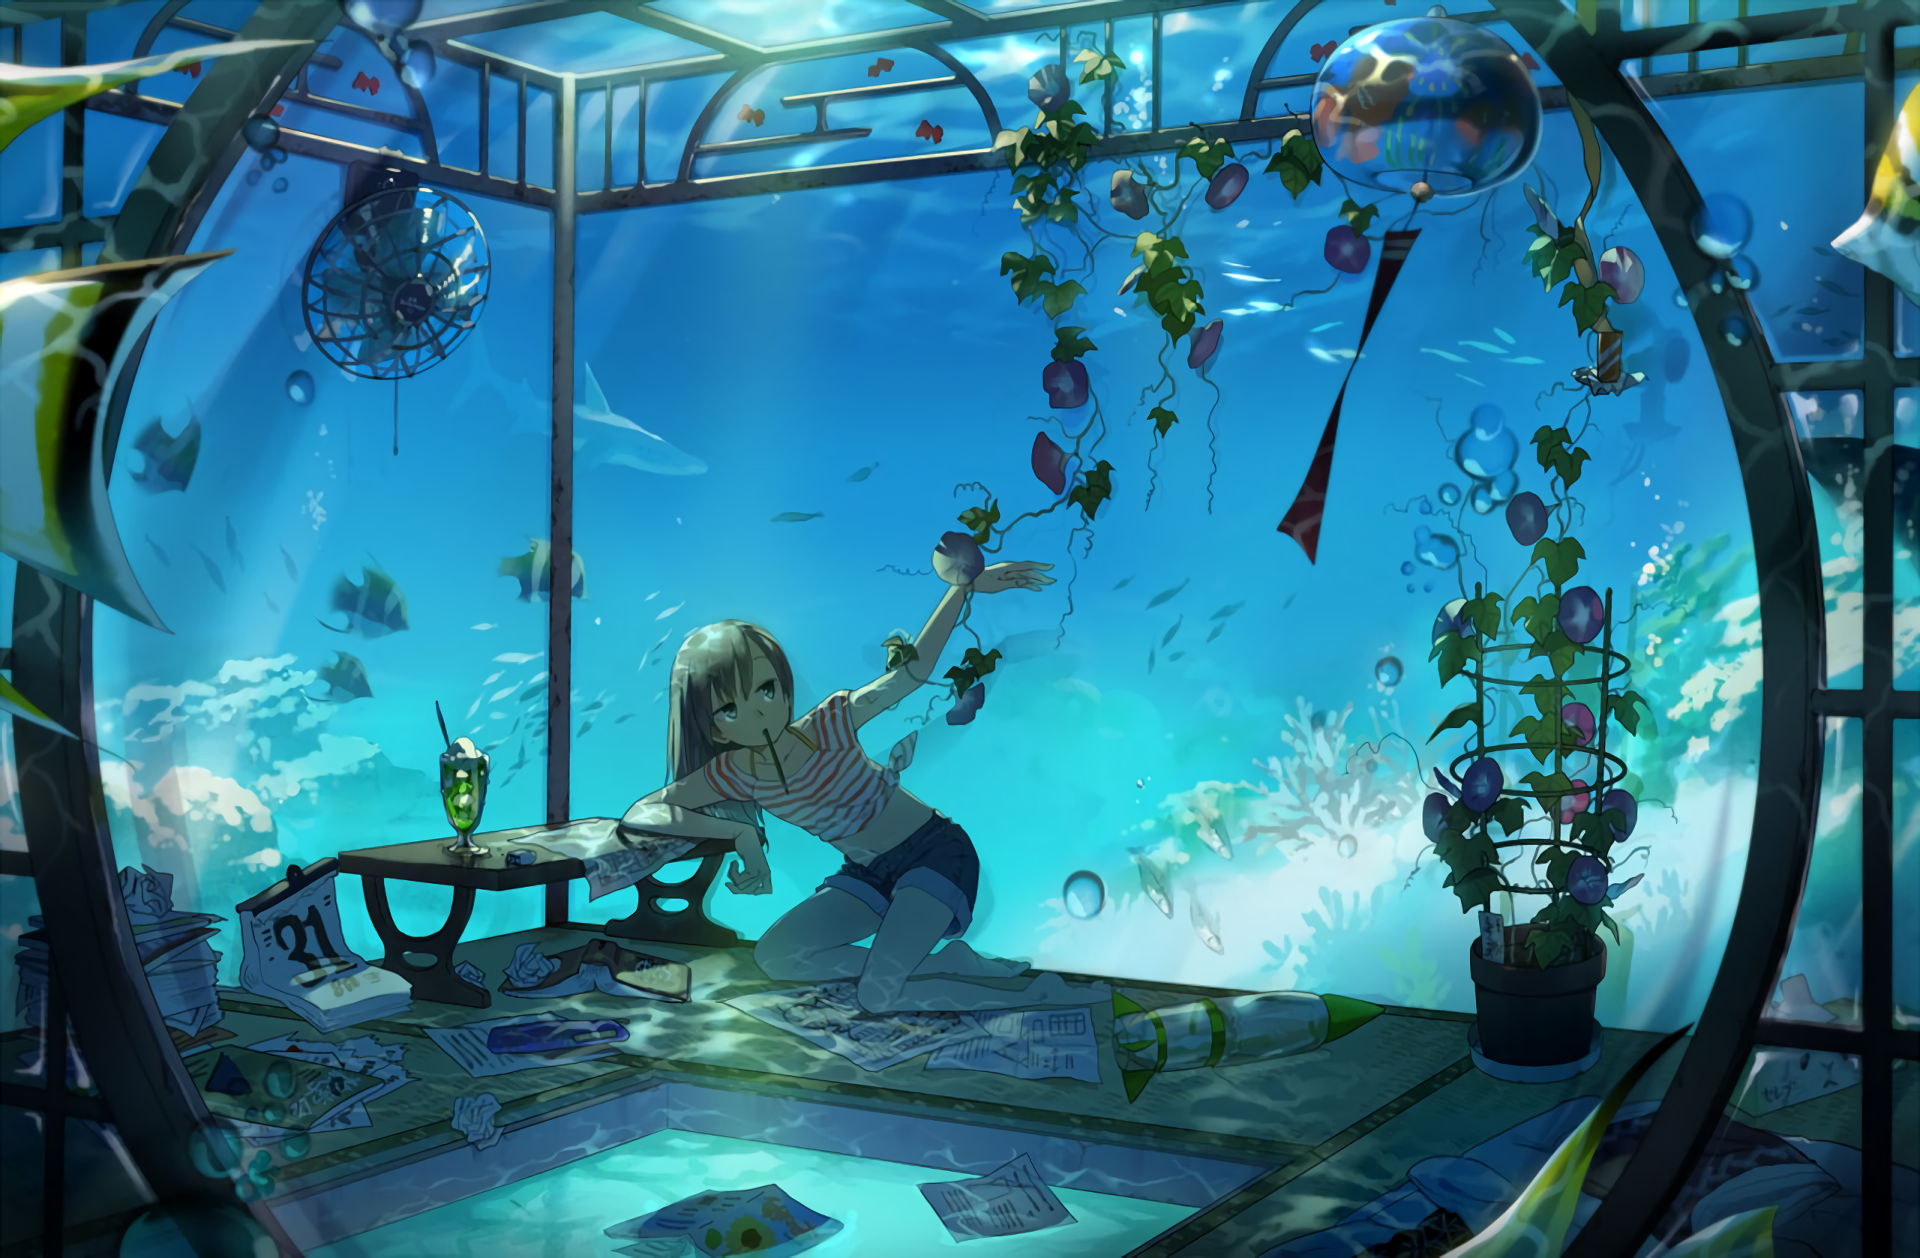 Hatsune Miku  Ocean Girl  Other  Anime Background Wallpapers on Desktop  Nexus Image 443172